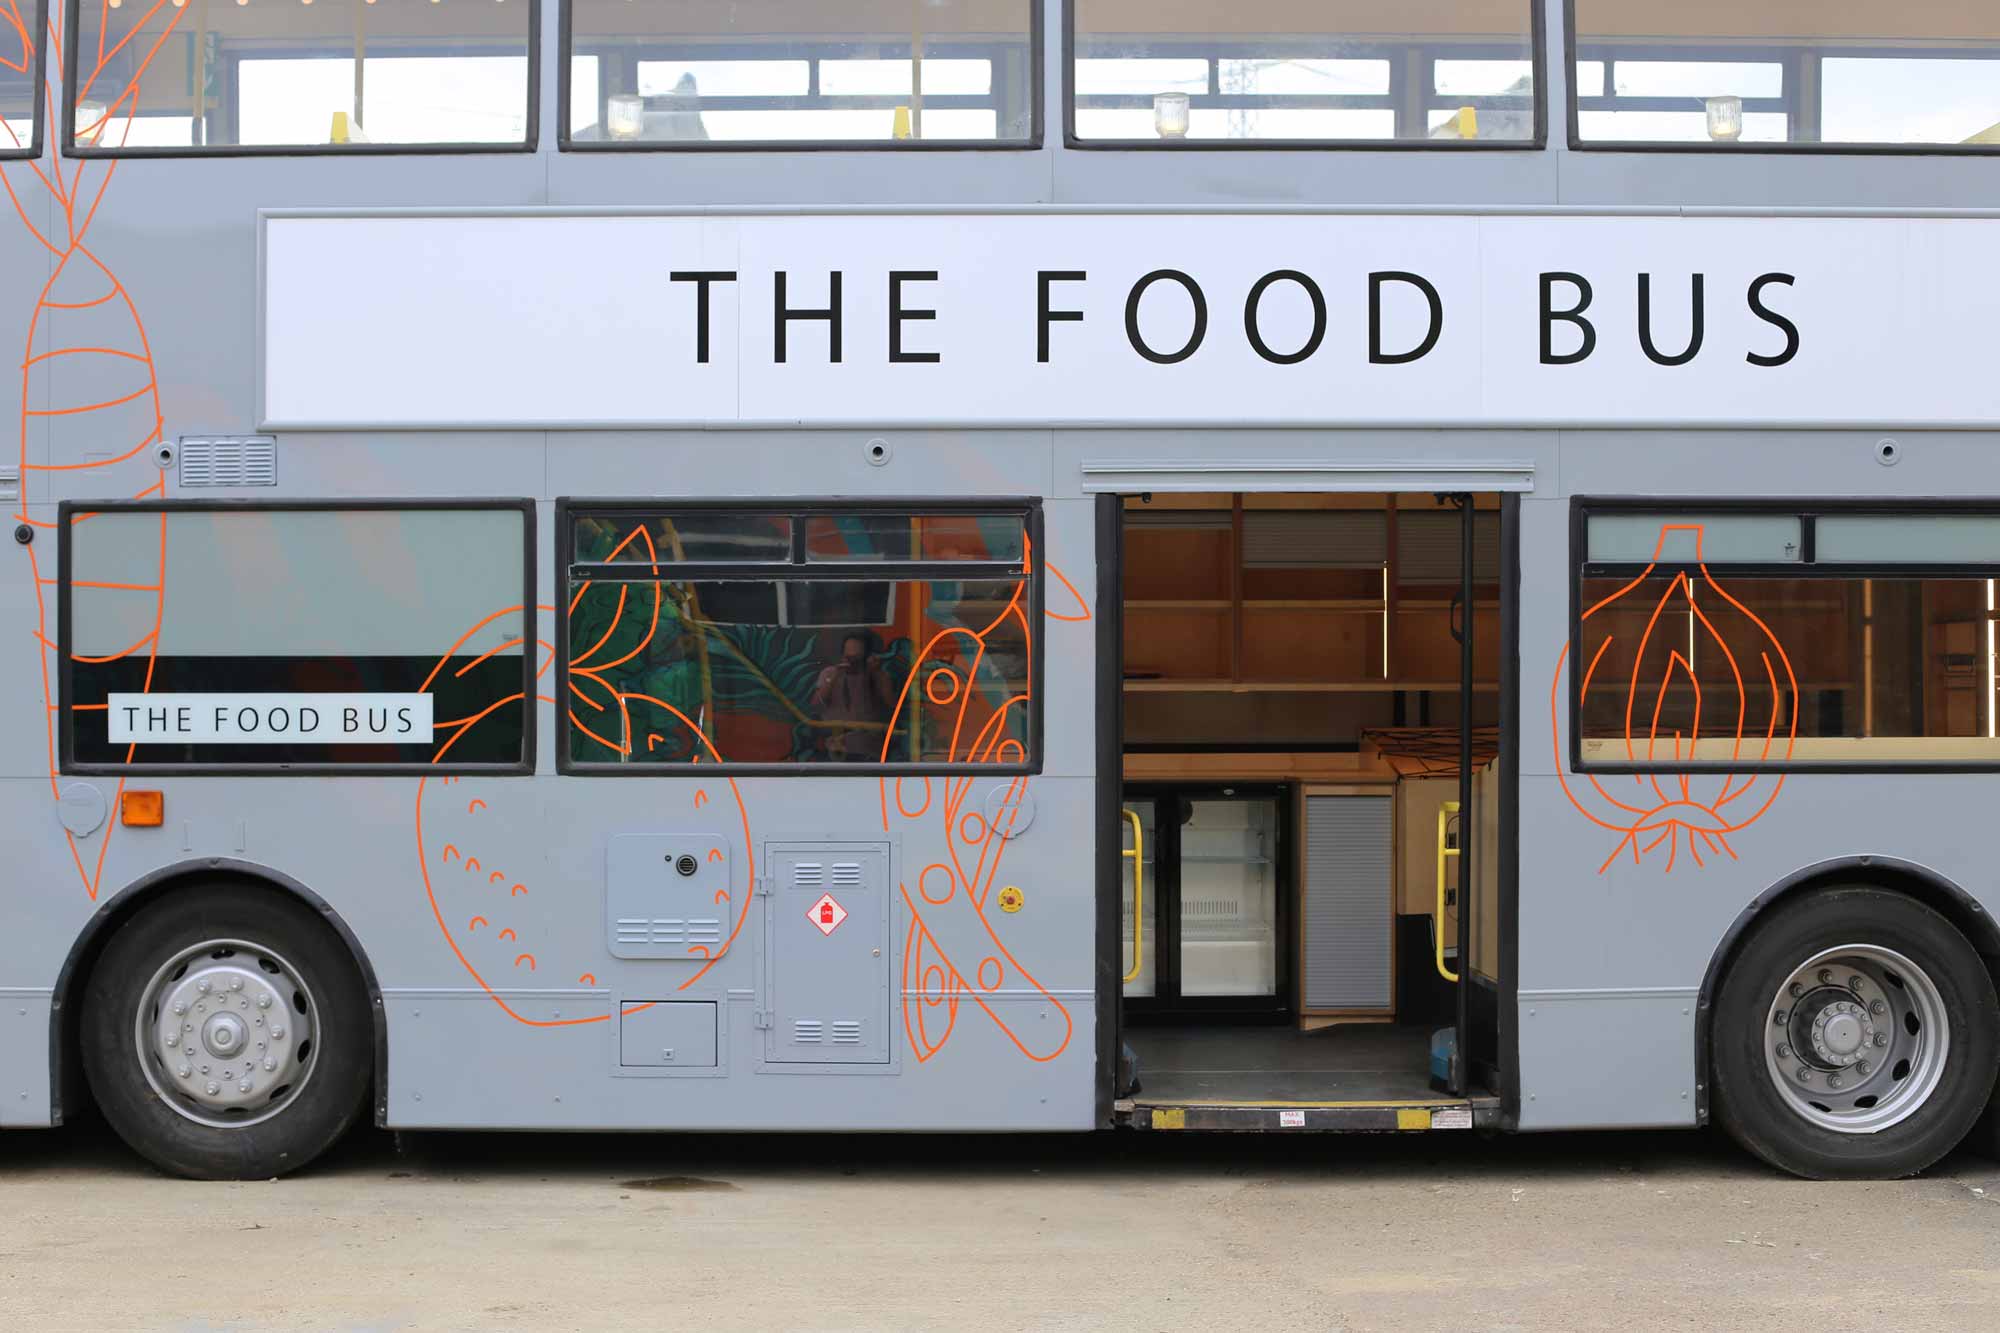 The Wandsworth Food Bus